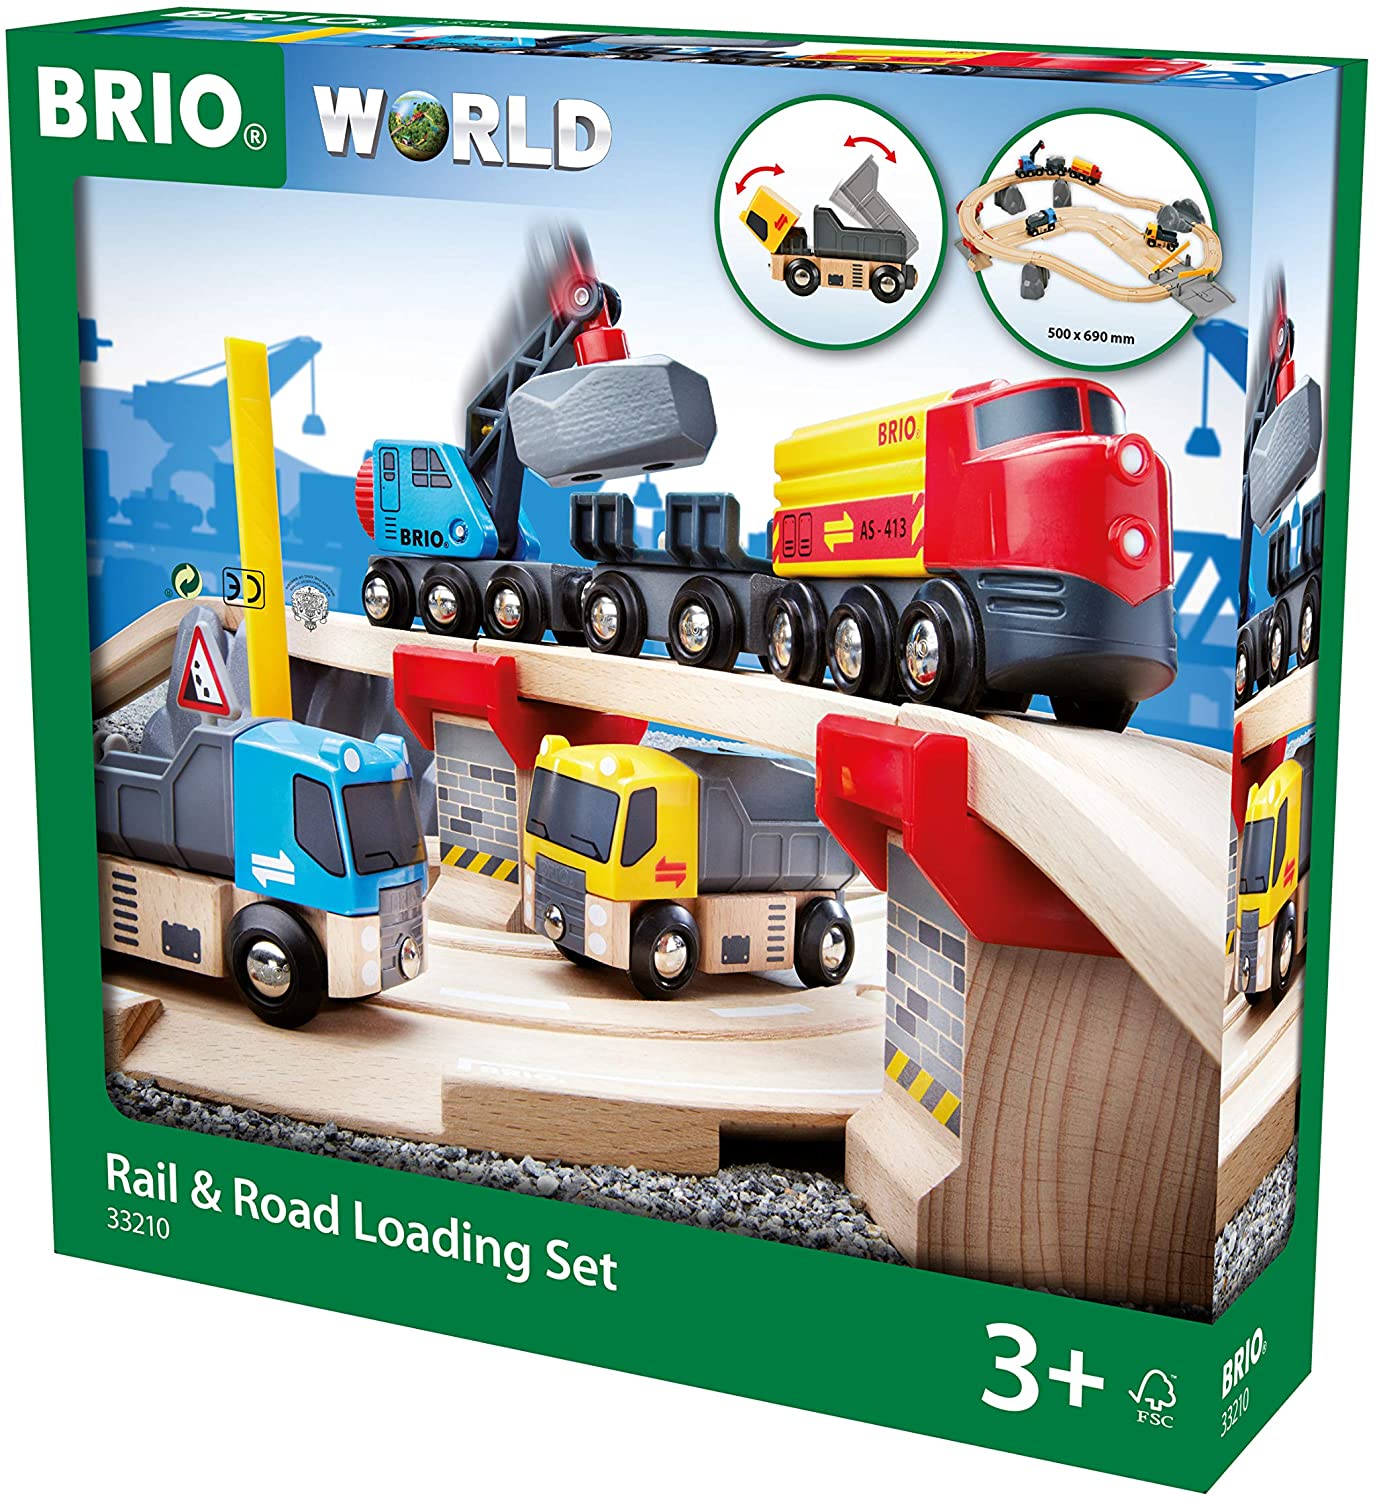 Brio 33210 Rail & Road Loading Set